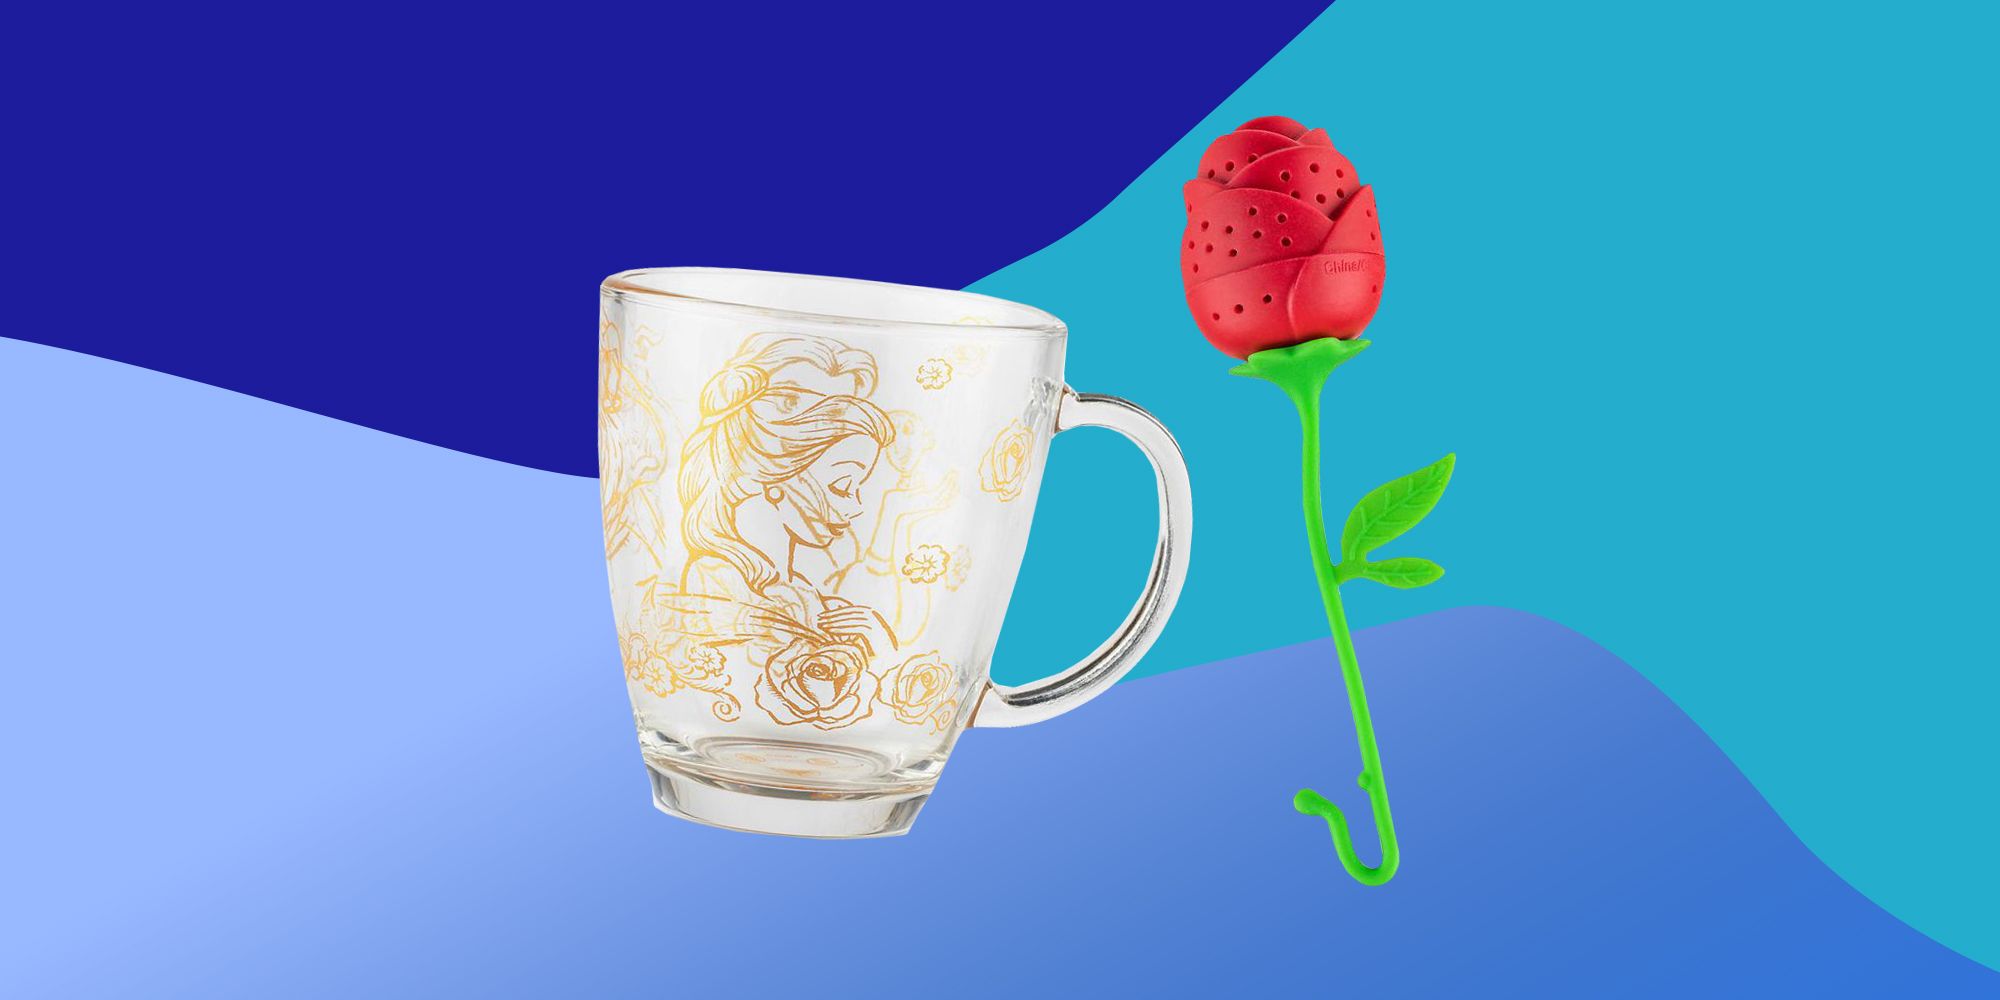 2021 Disney Store Beauty and the Beast Mug and Rose Tea Infuser In Hand NIB